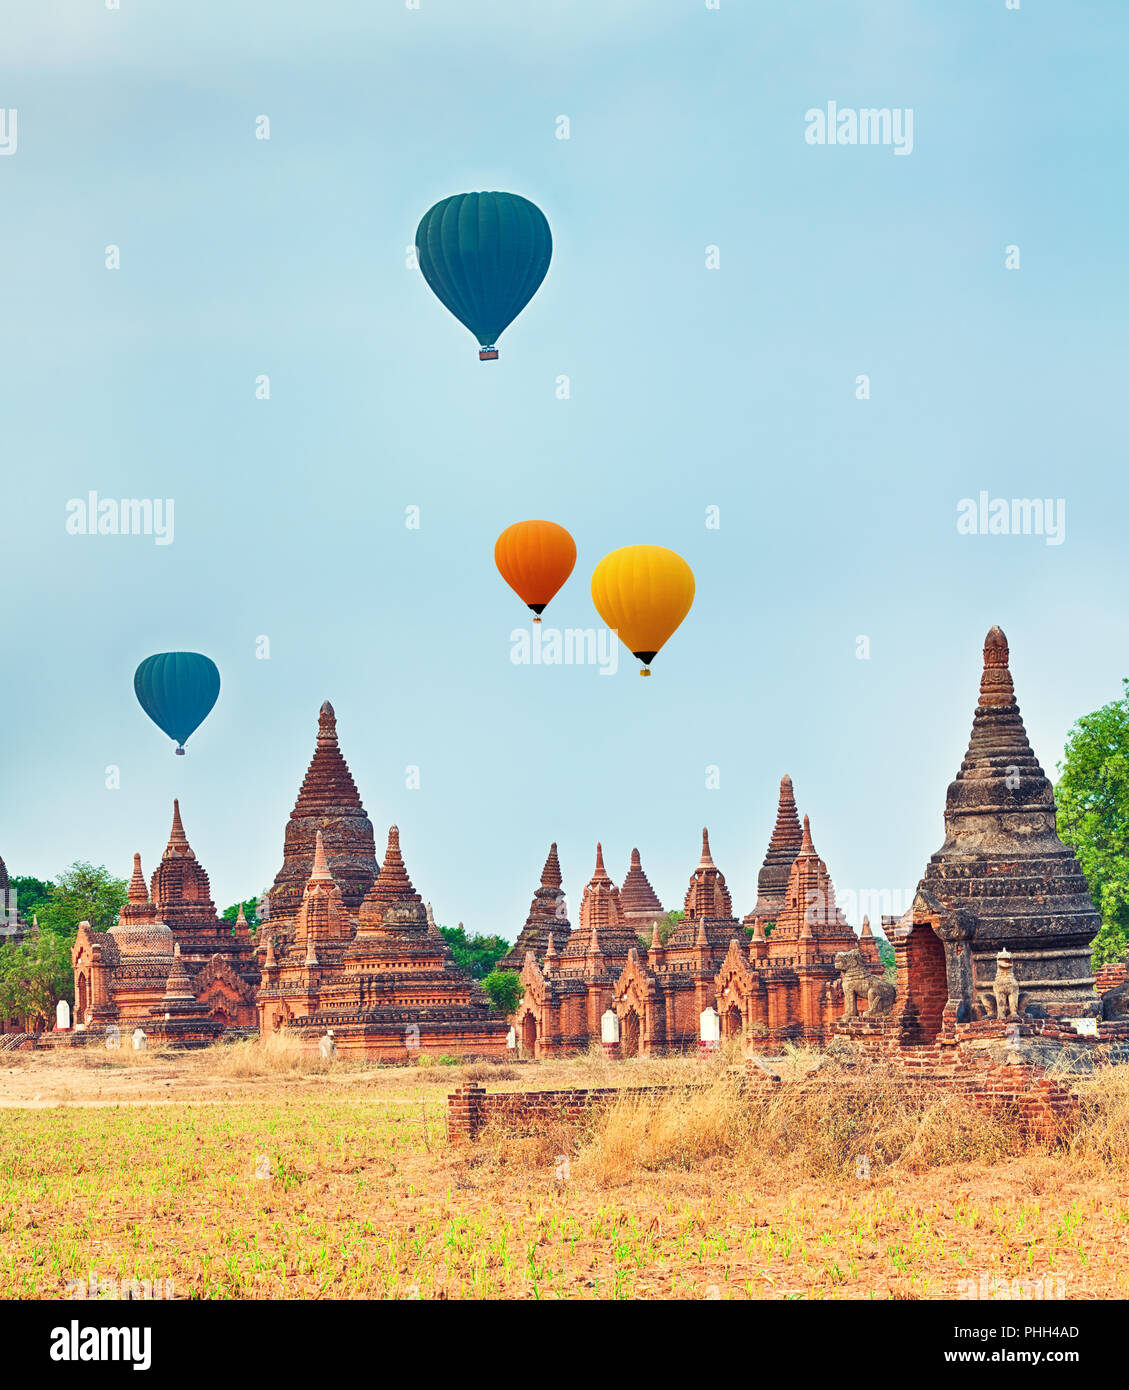 Balloons over Temples in Bagan. Myanmar. Stock Photo